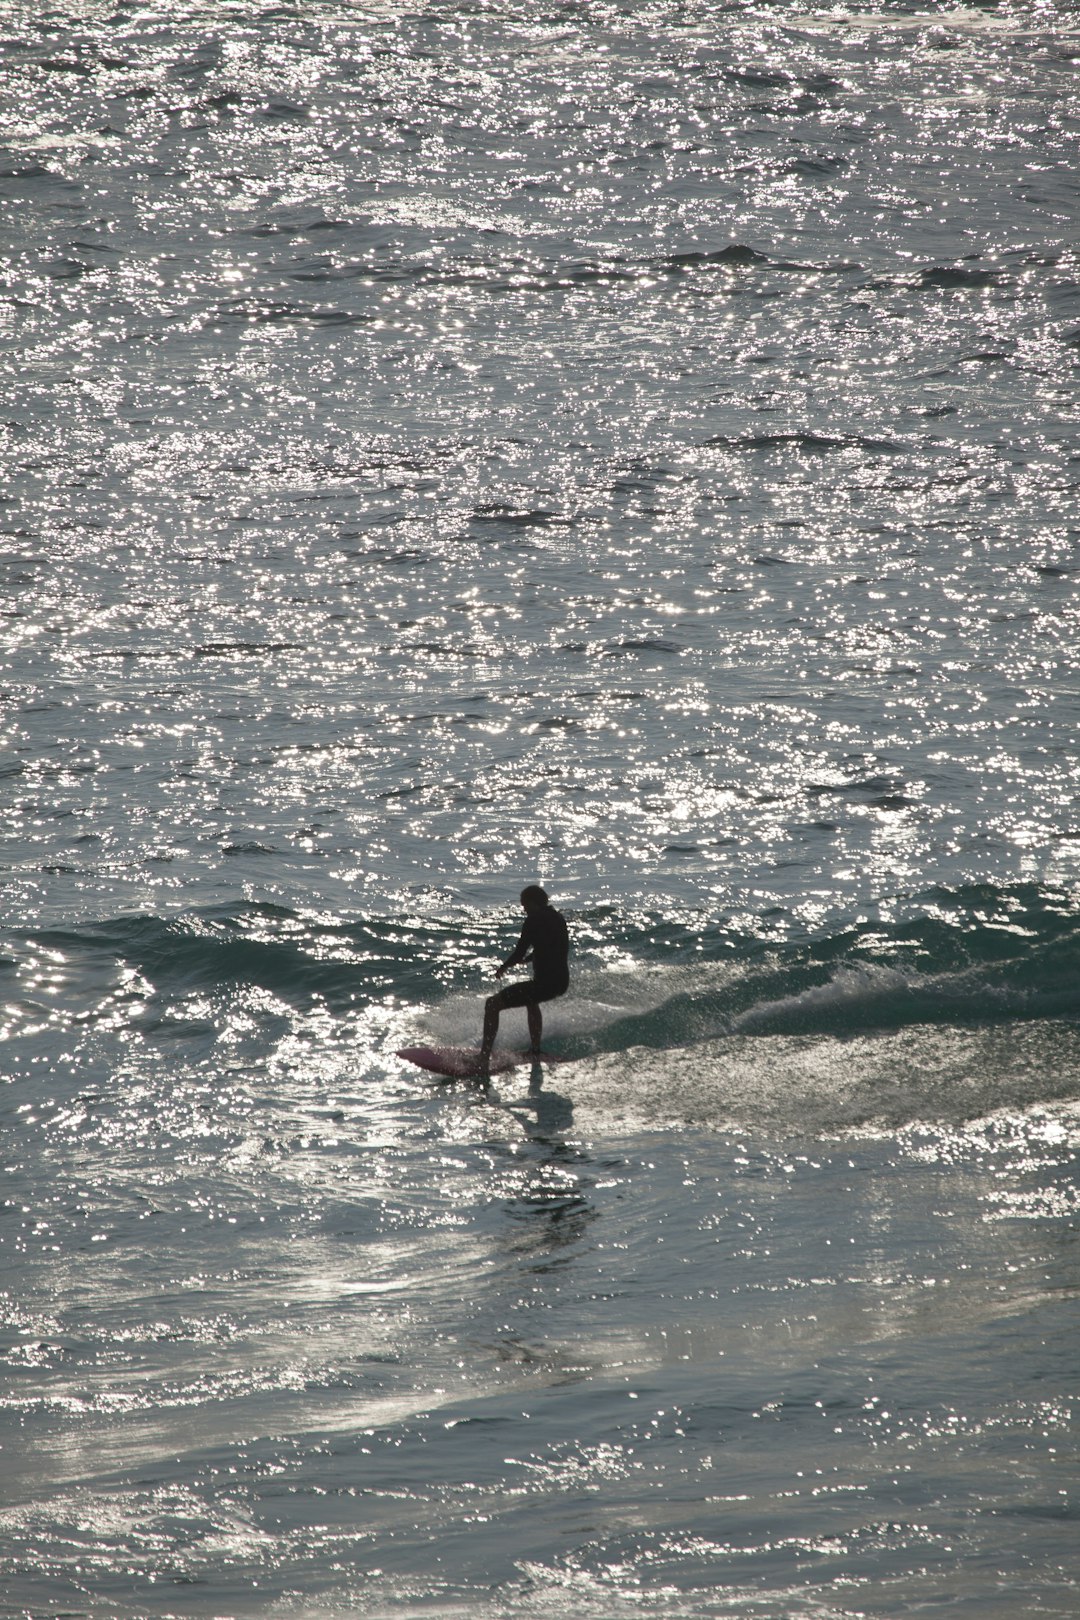 Surfing photo spot Tamarama Beach Bondi Beach